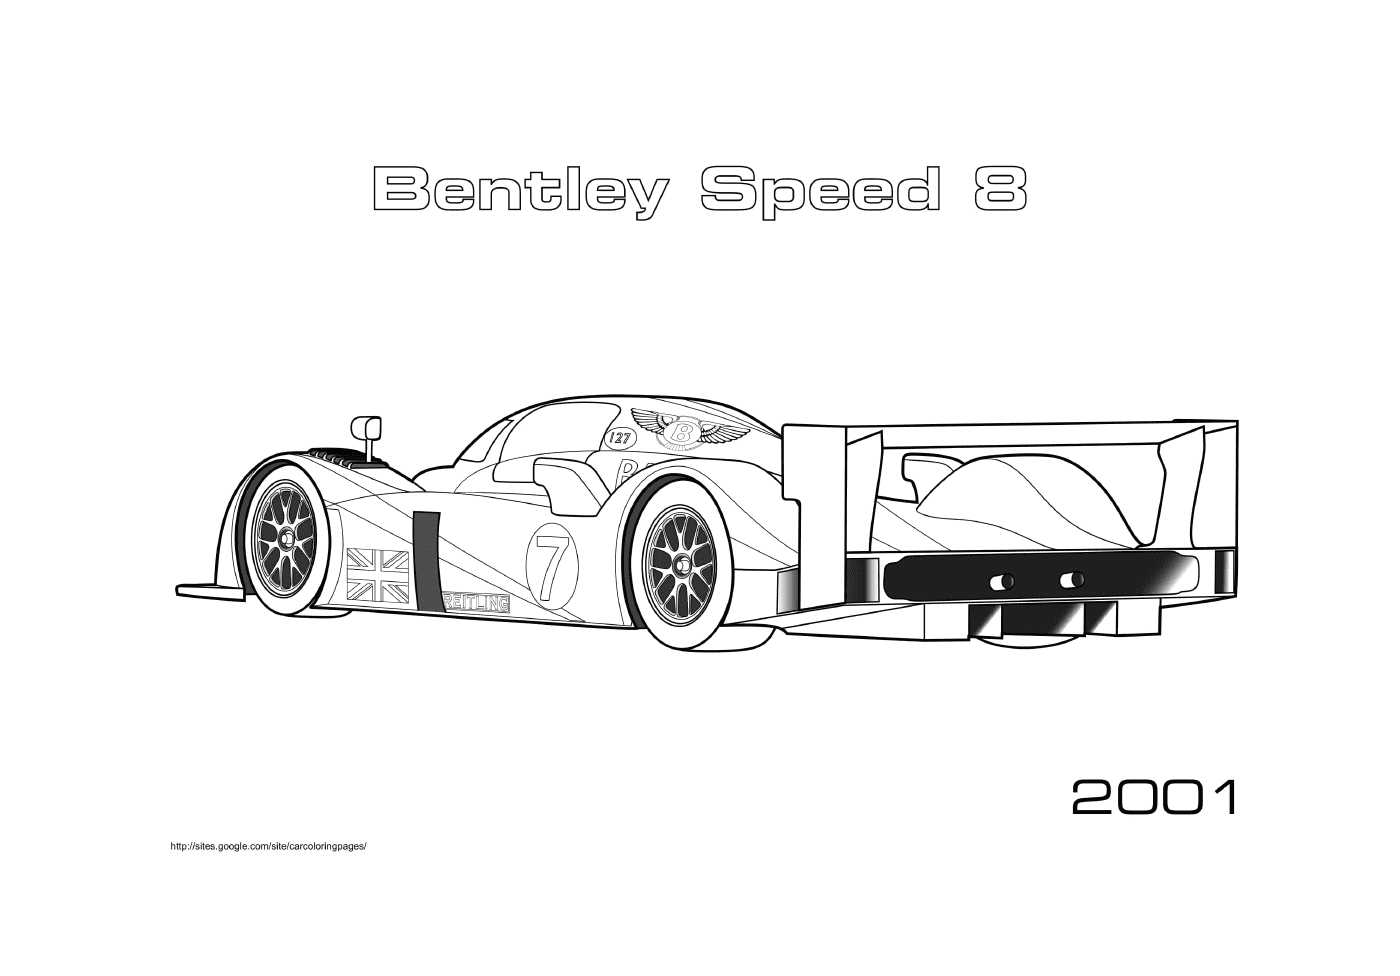  F1 Bentley Velocidade 8 2001 